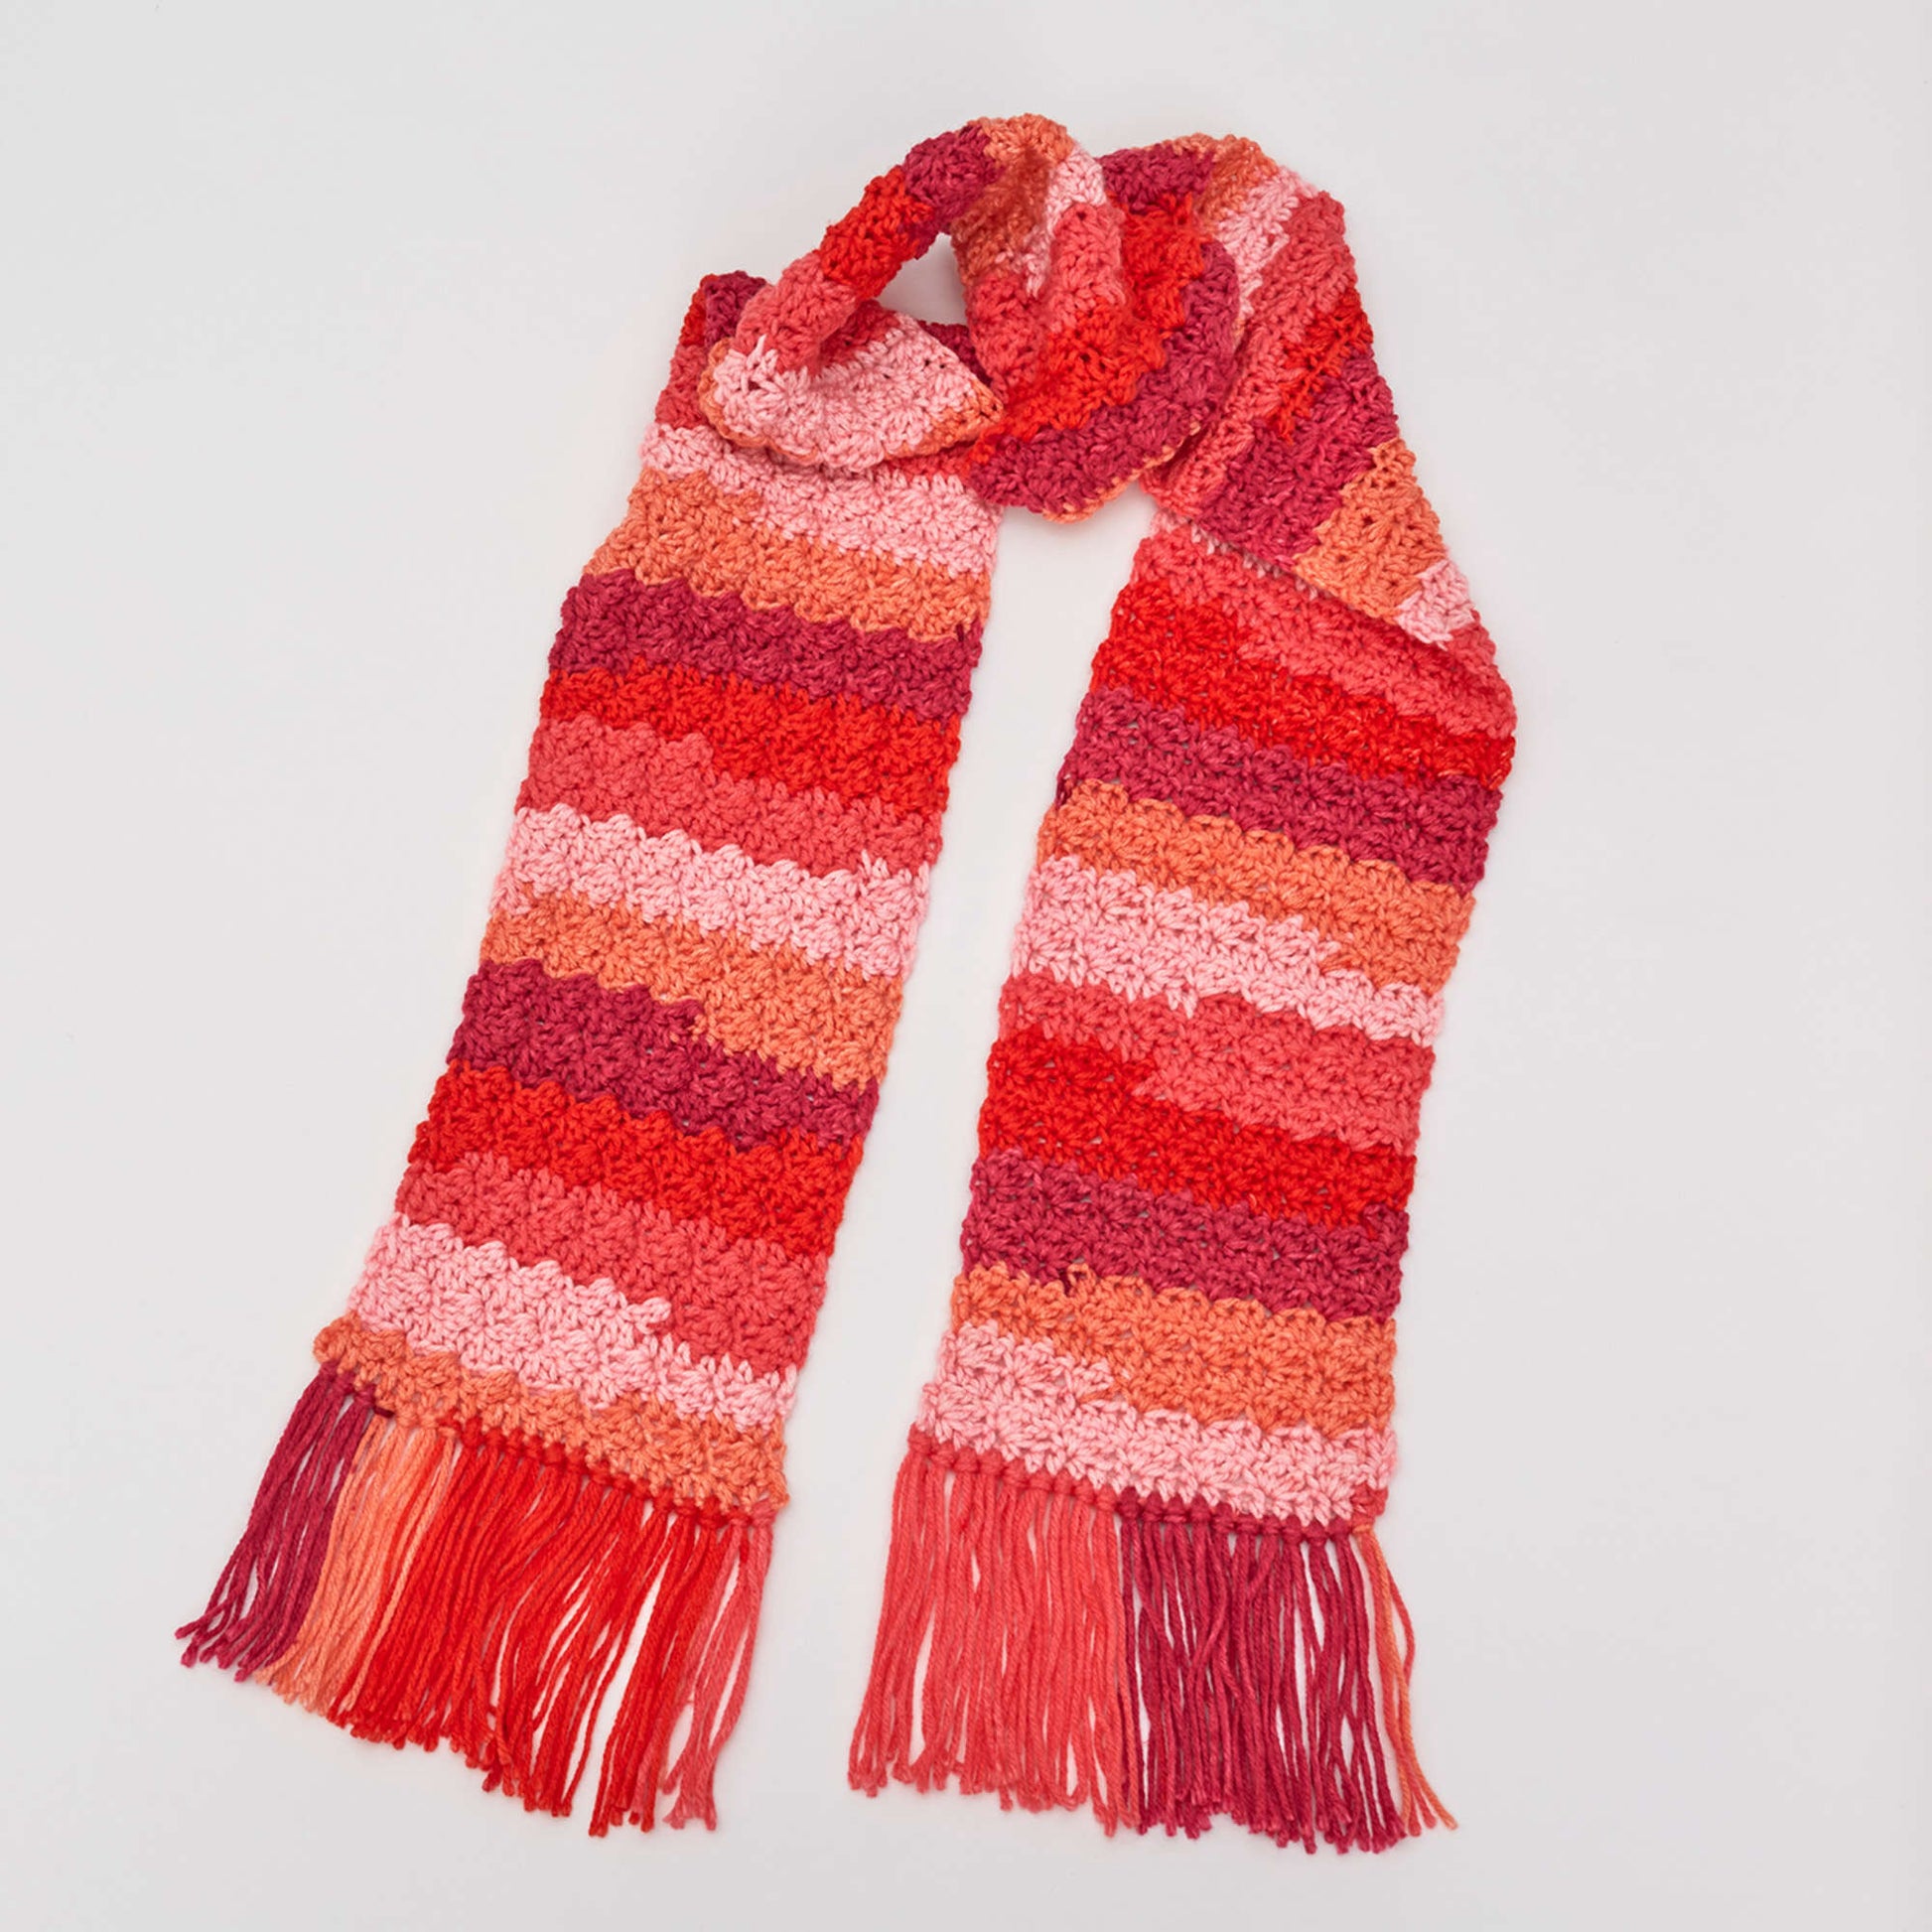 Free Red Heart Snazzy Striped Scarf Crochet Pattern